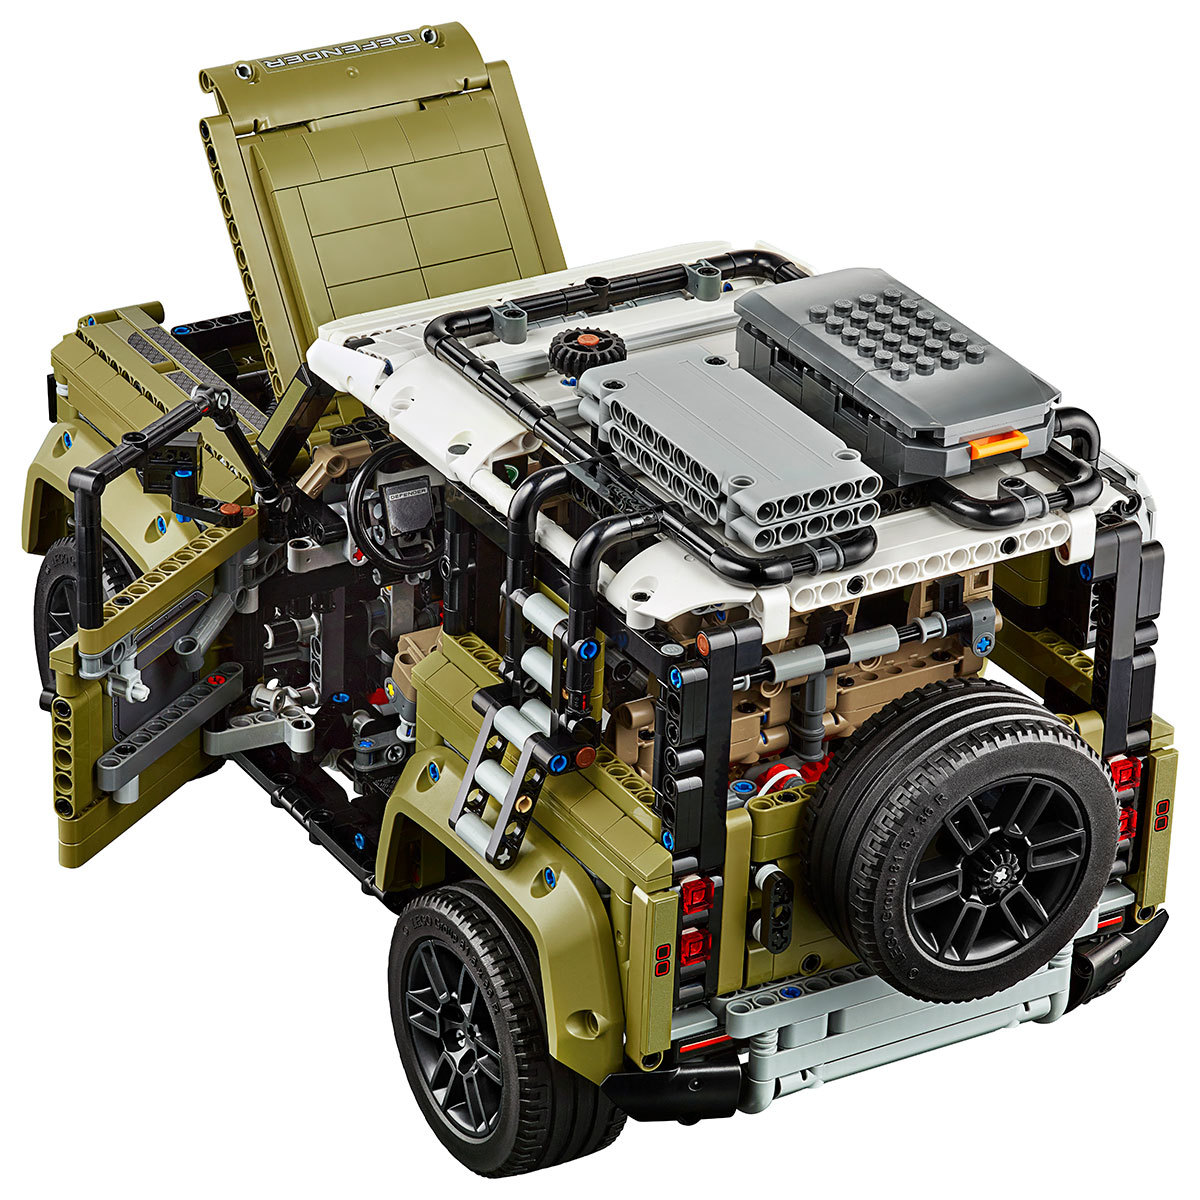 LEGO Technic Land Rover Defender - Model 42110 (11+ Years)